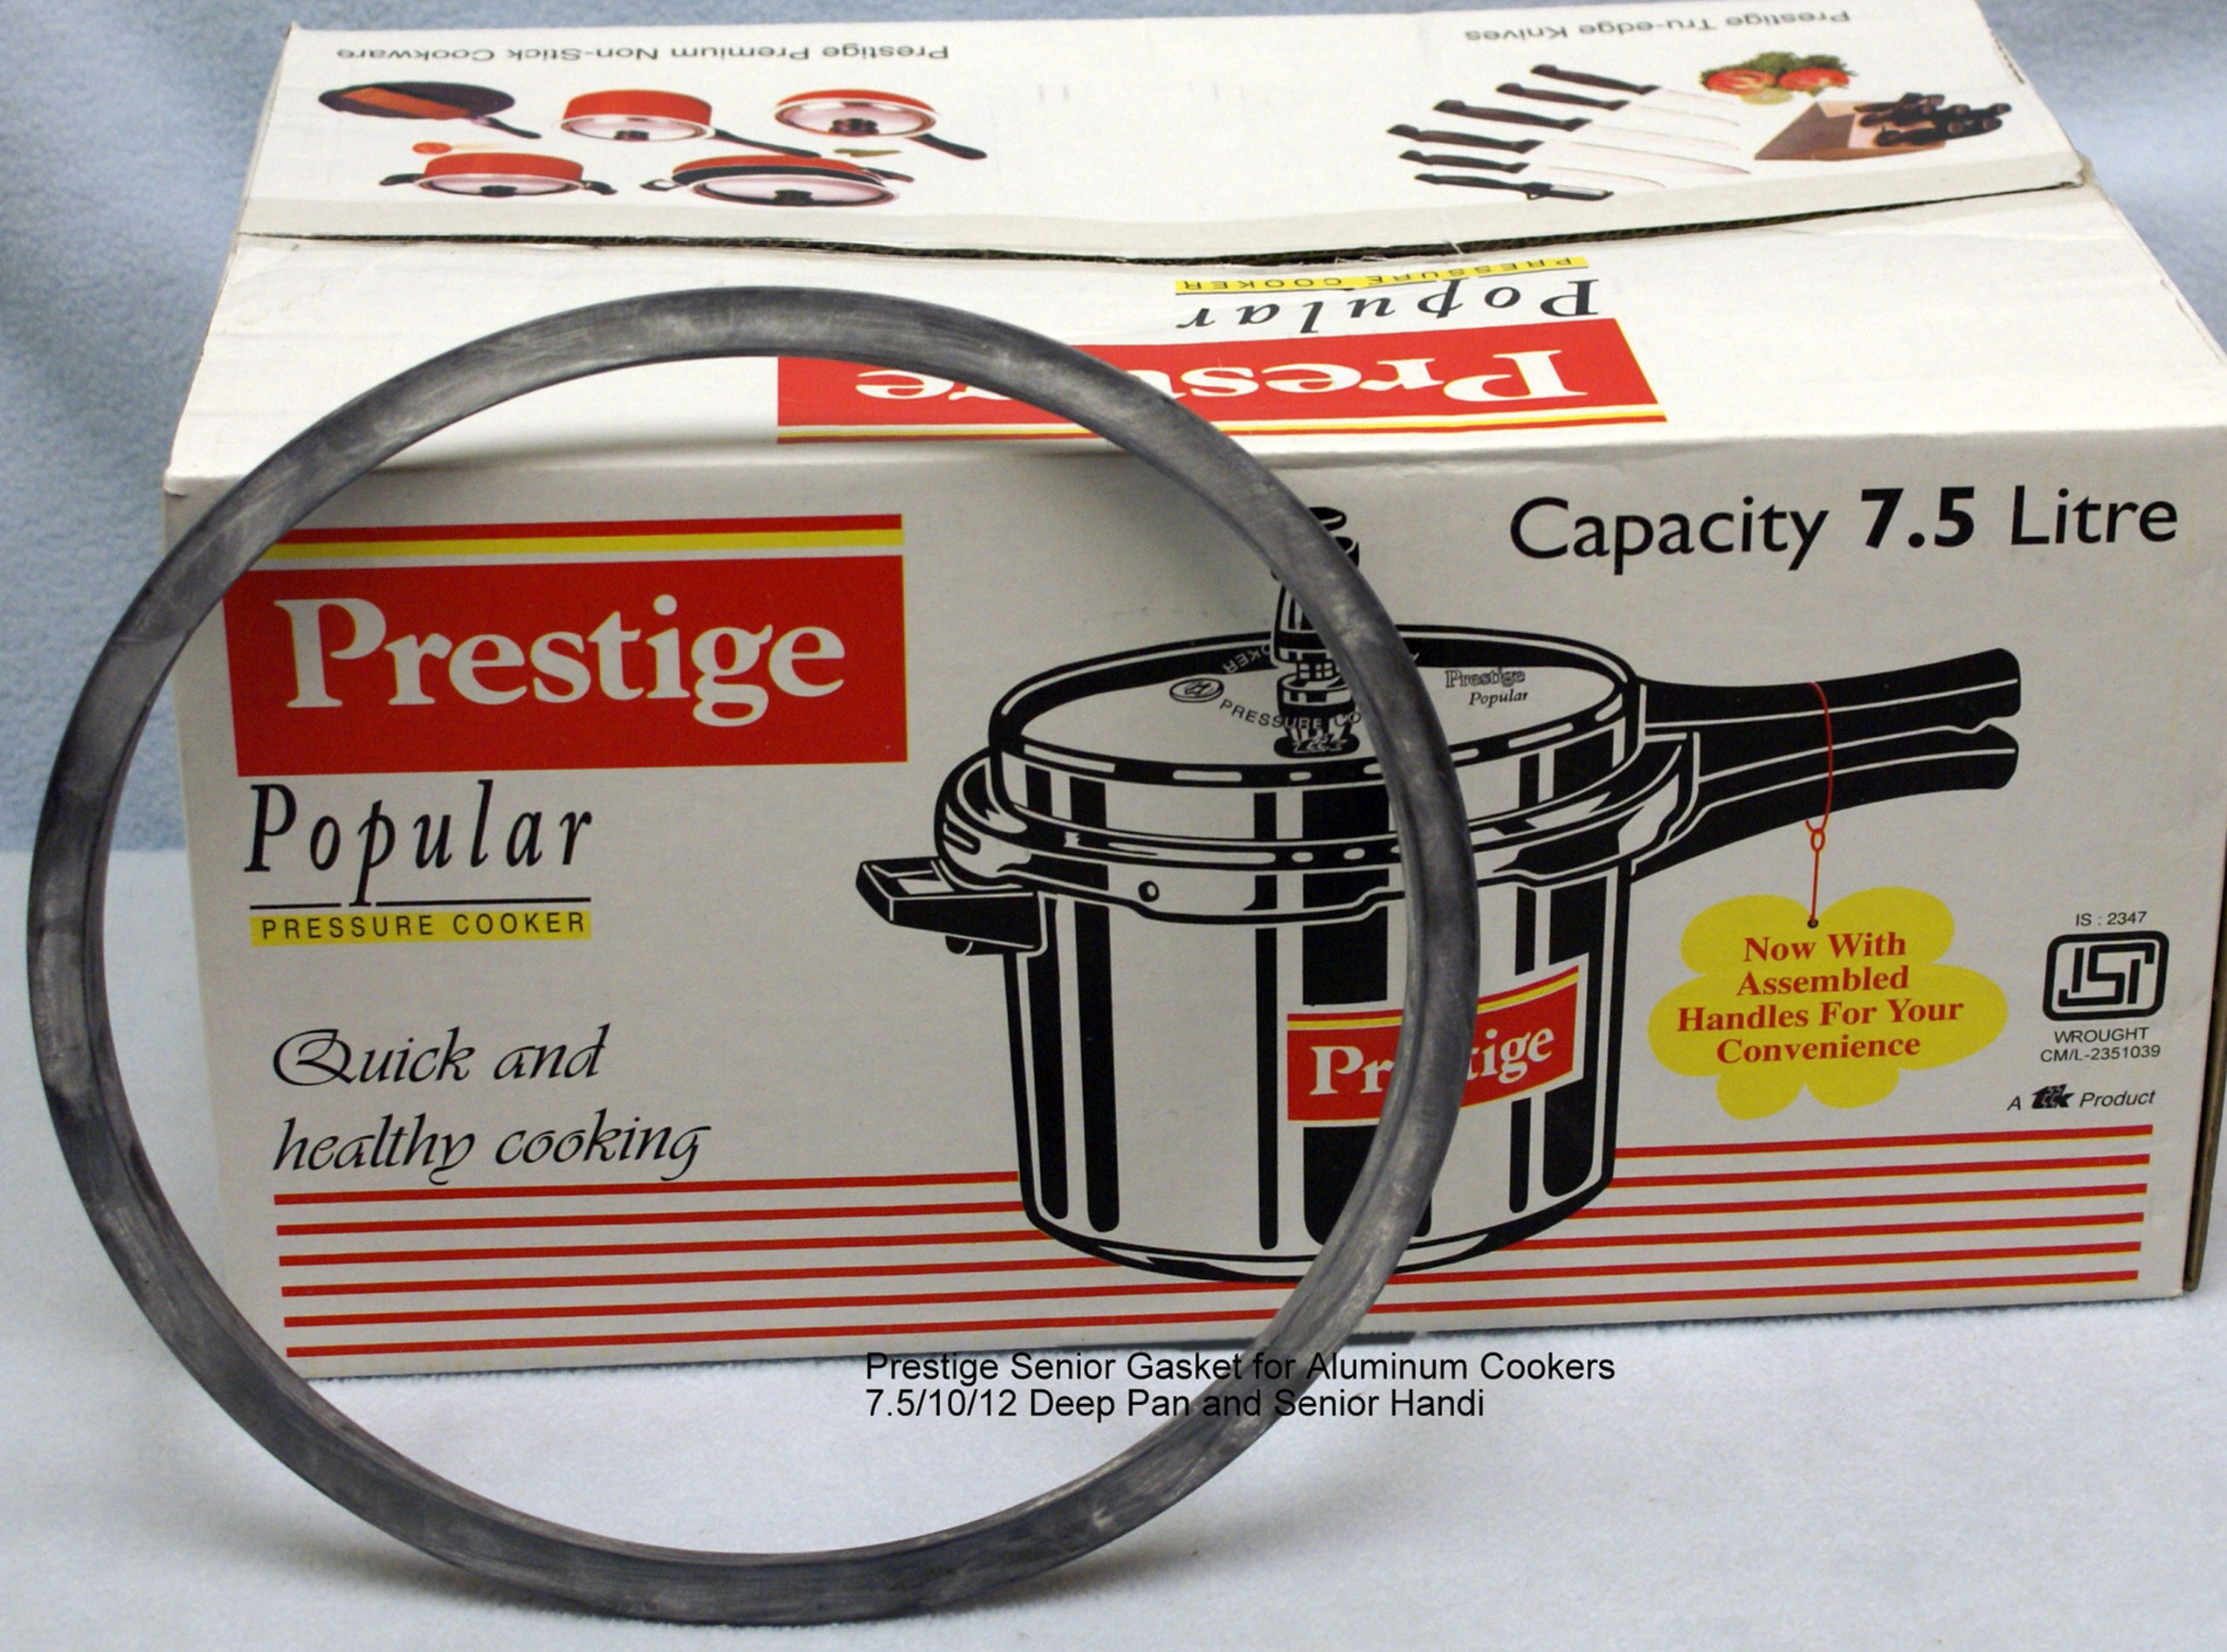 Prestige Gasket for Aluminum Cookers Senior